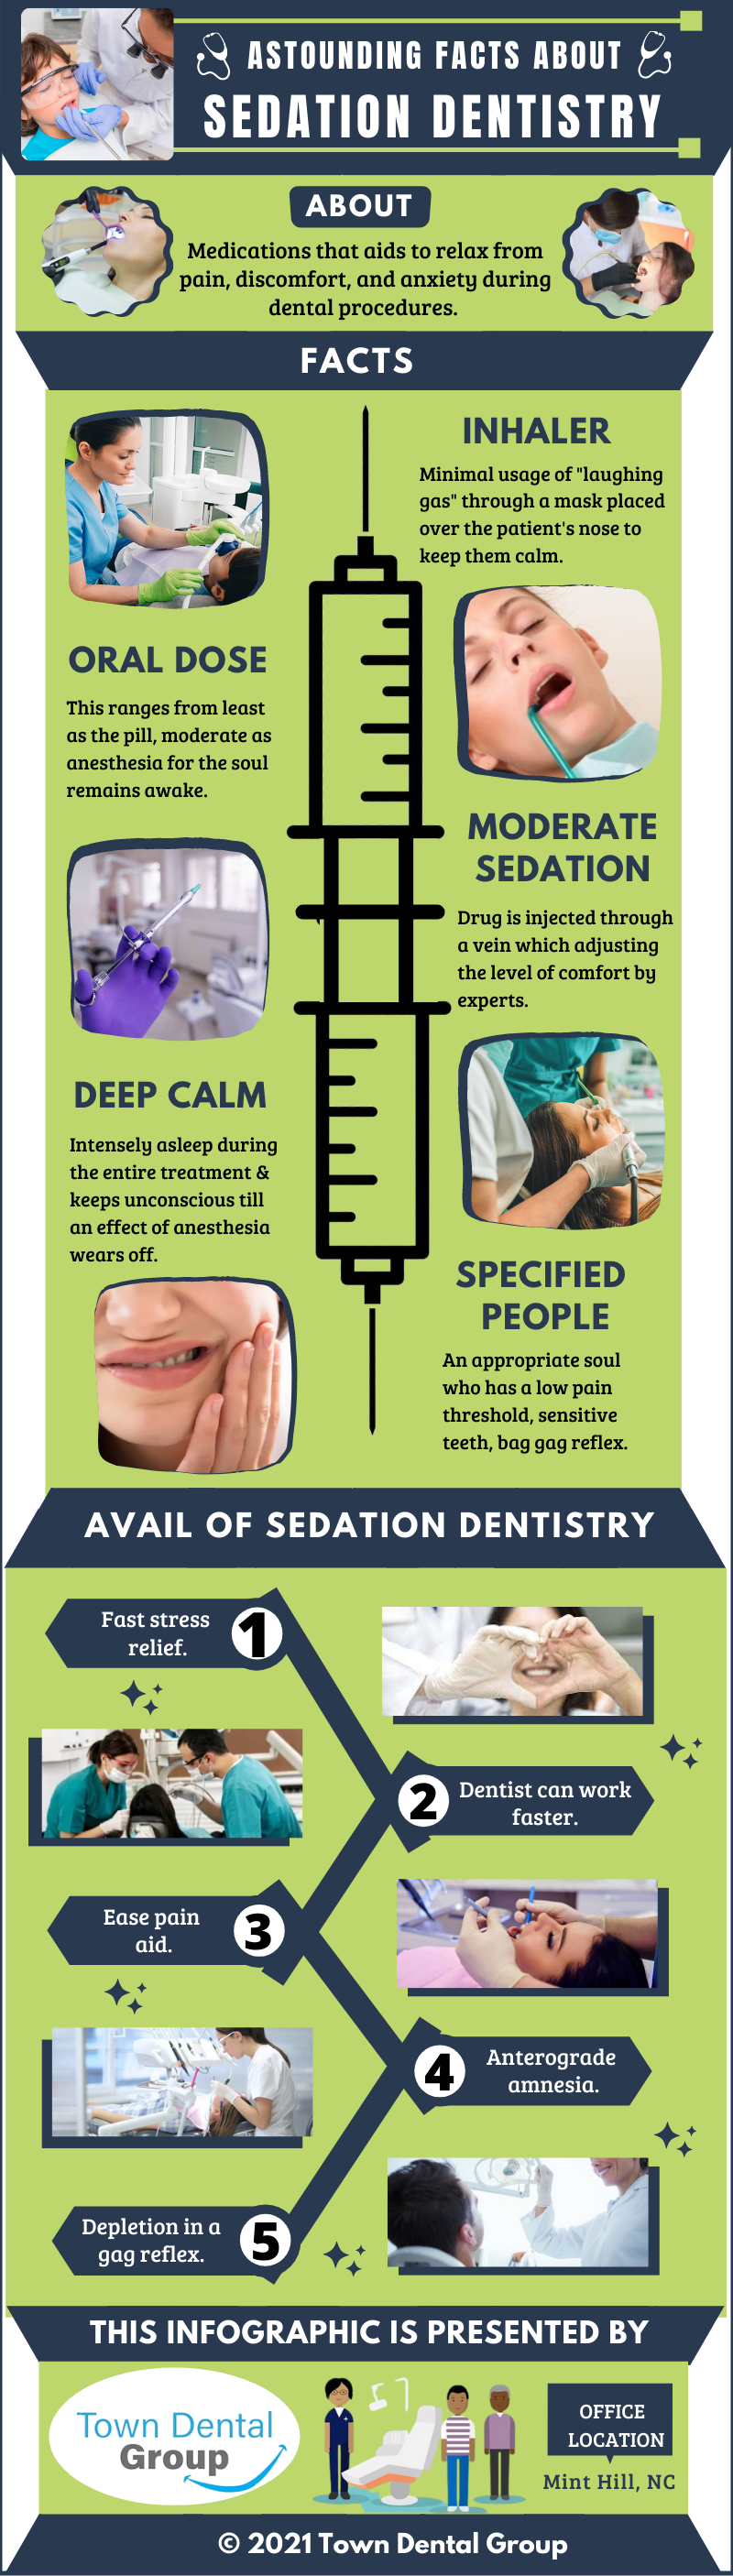 Easing Dental Fears with Sedation Dentistry